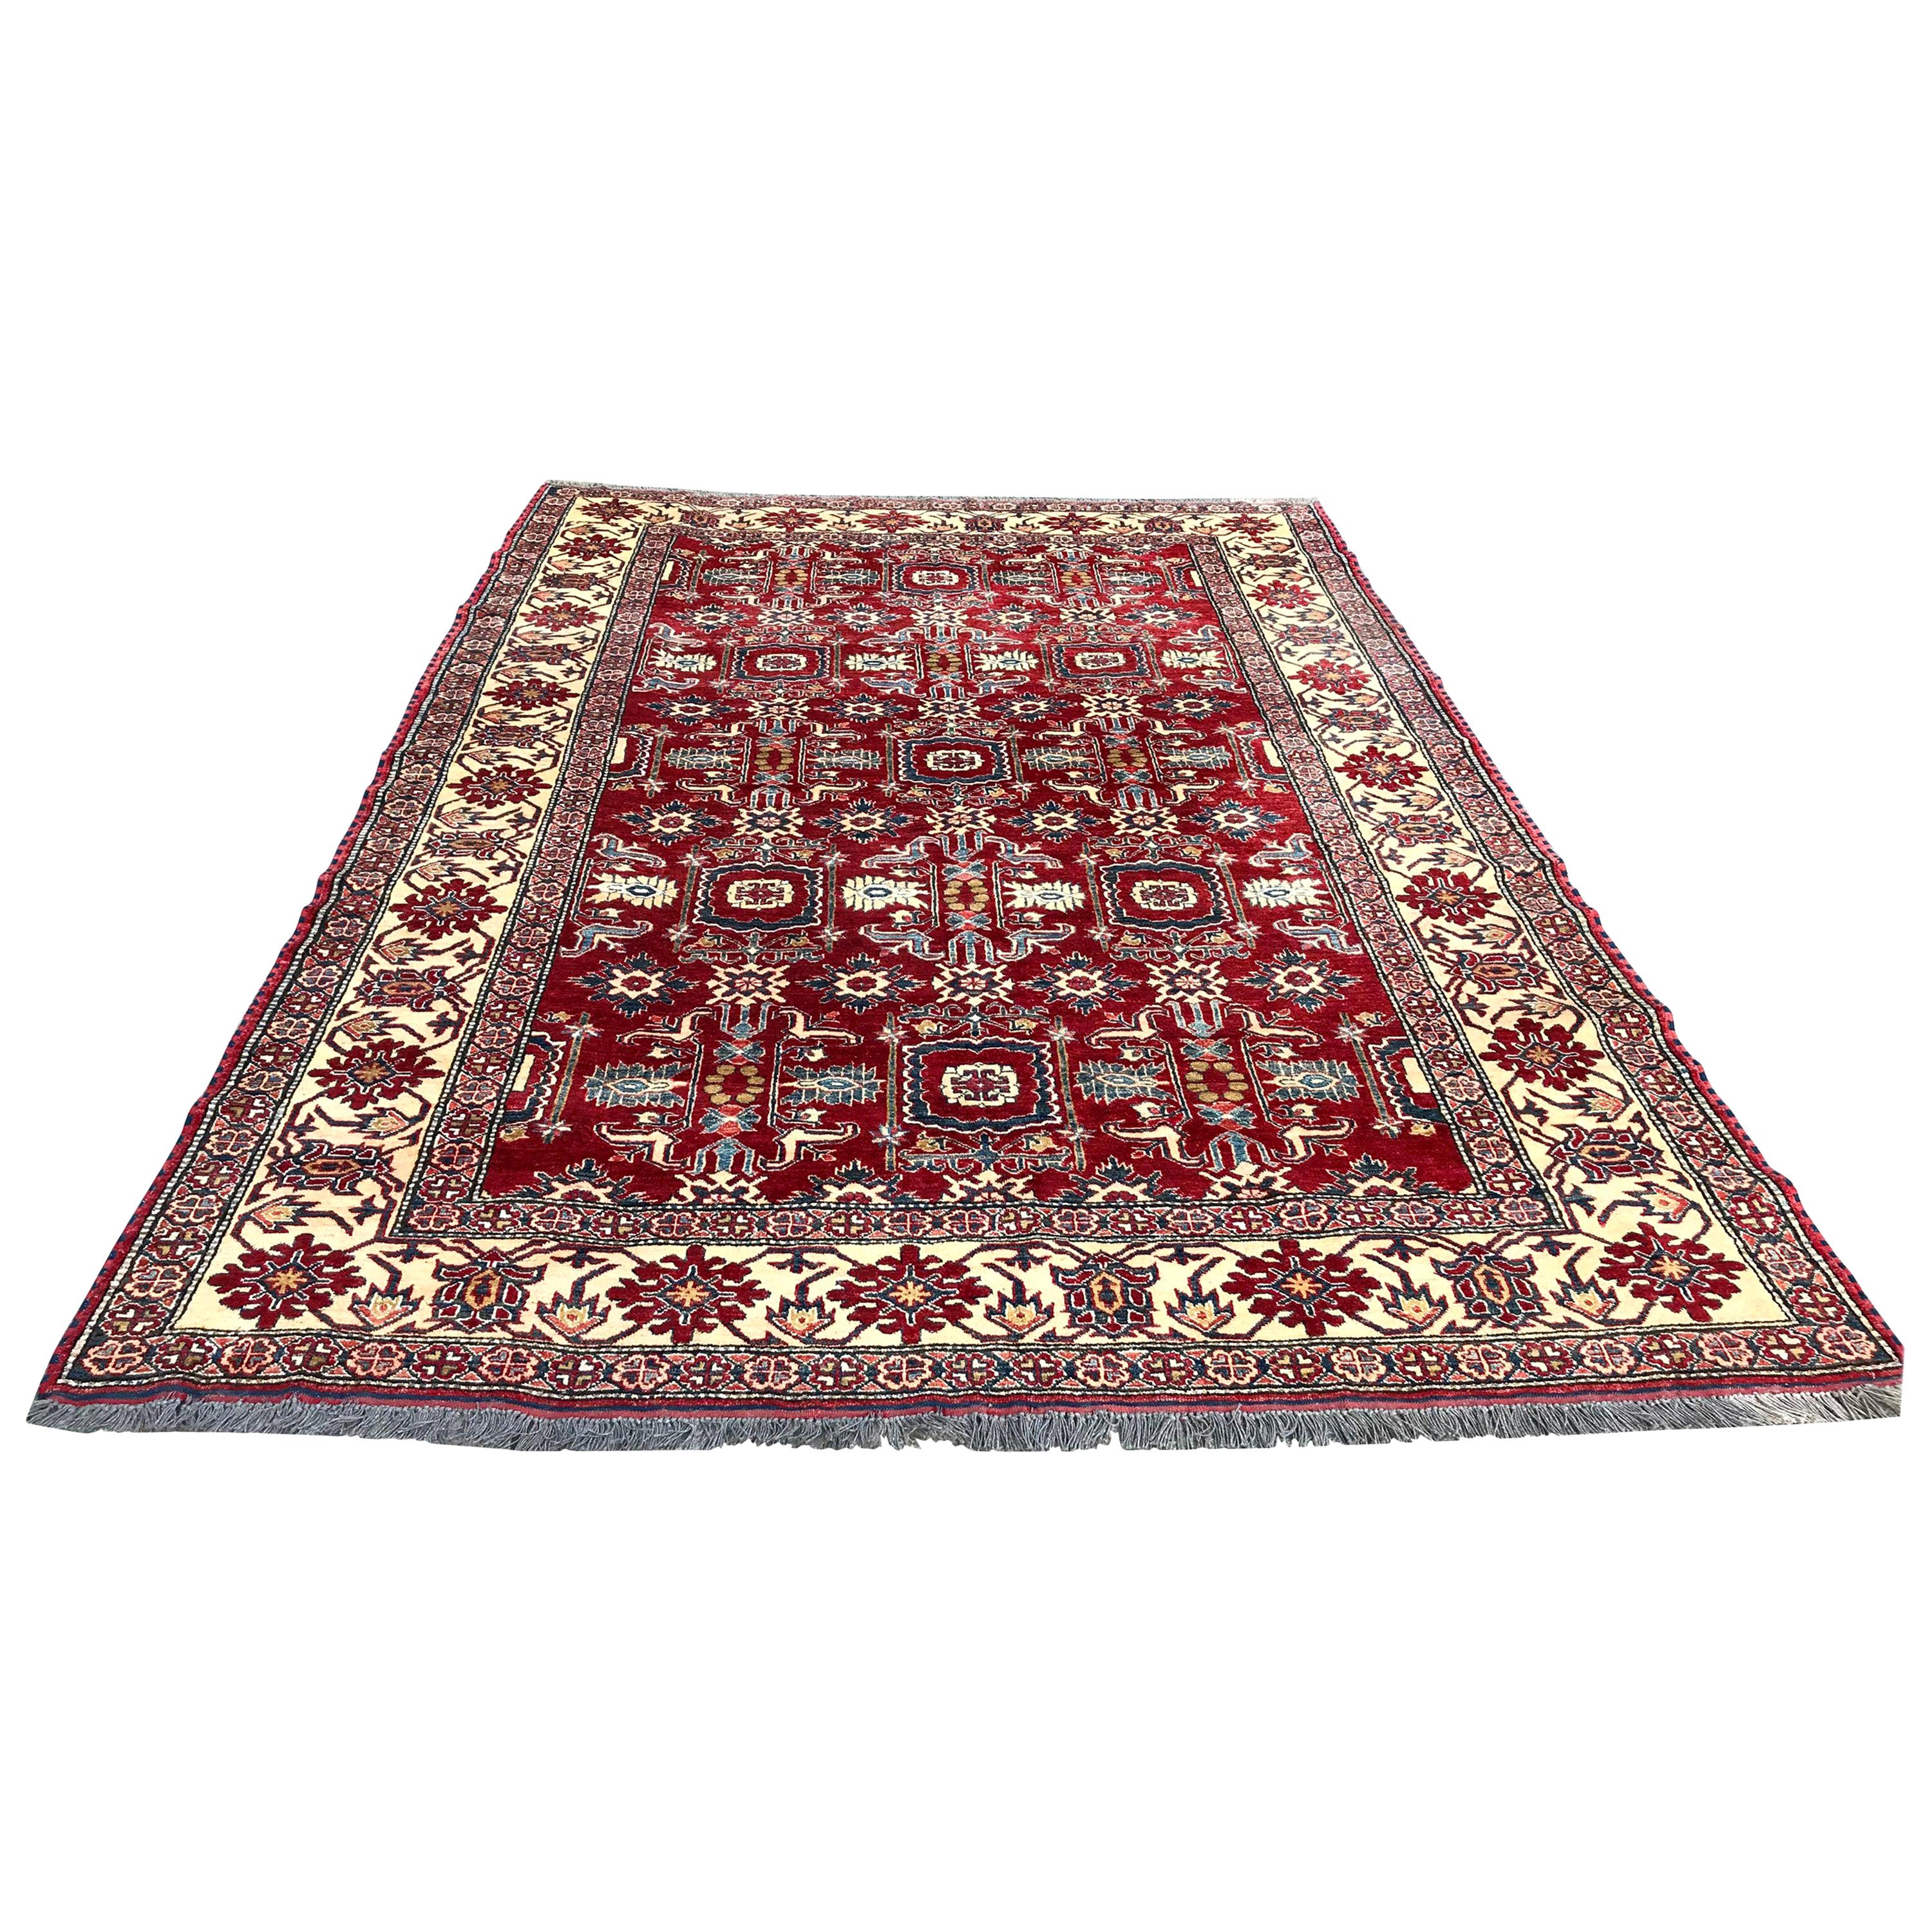 Bobyrug’s Beautiful Afghan Mahal Style Carpet